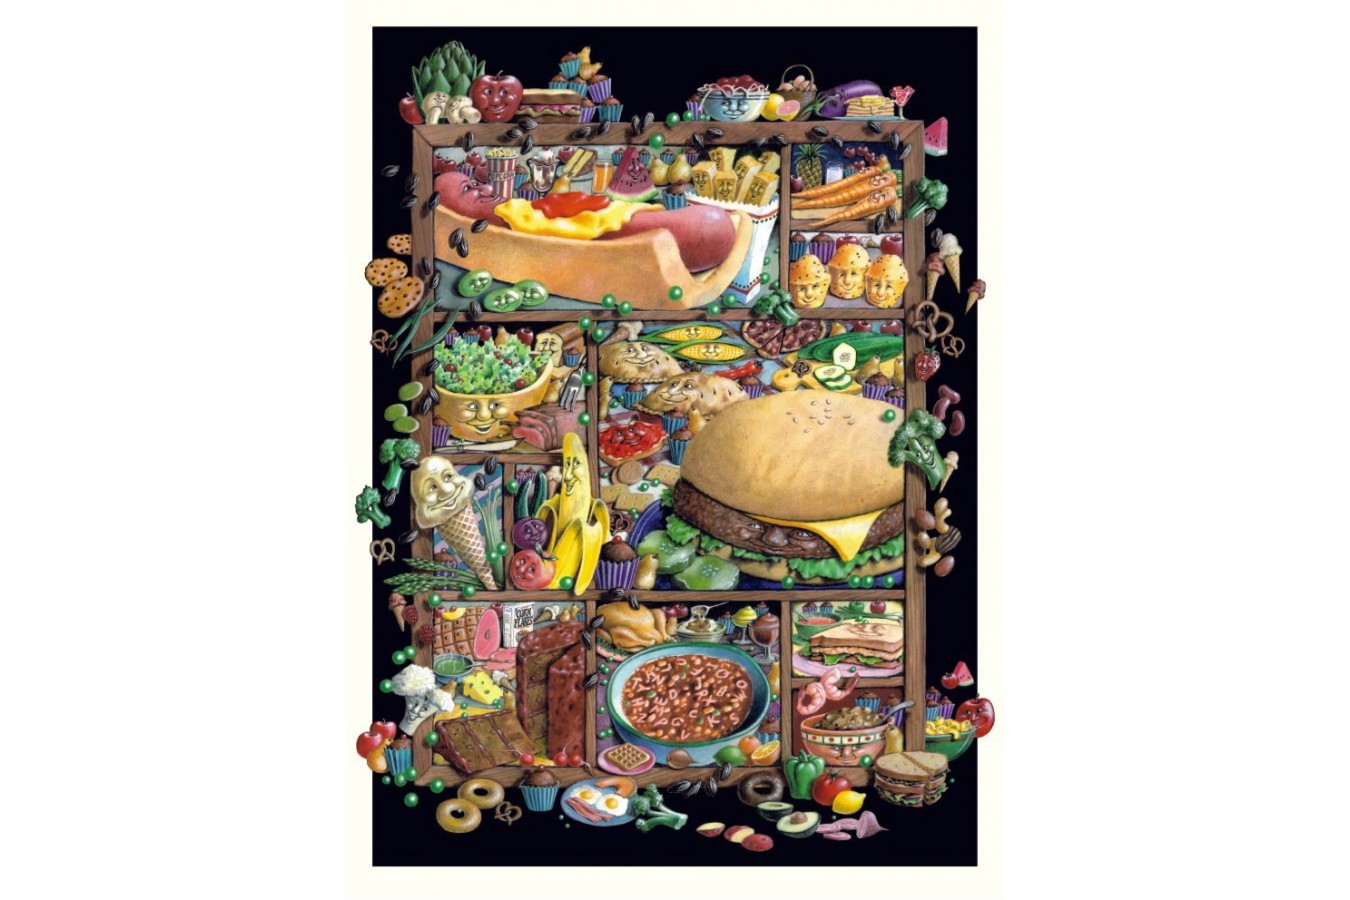 Puzzle Anatolian - Shadowbox Hunt-food, 1000 piese (1008)